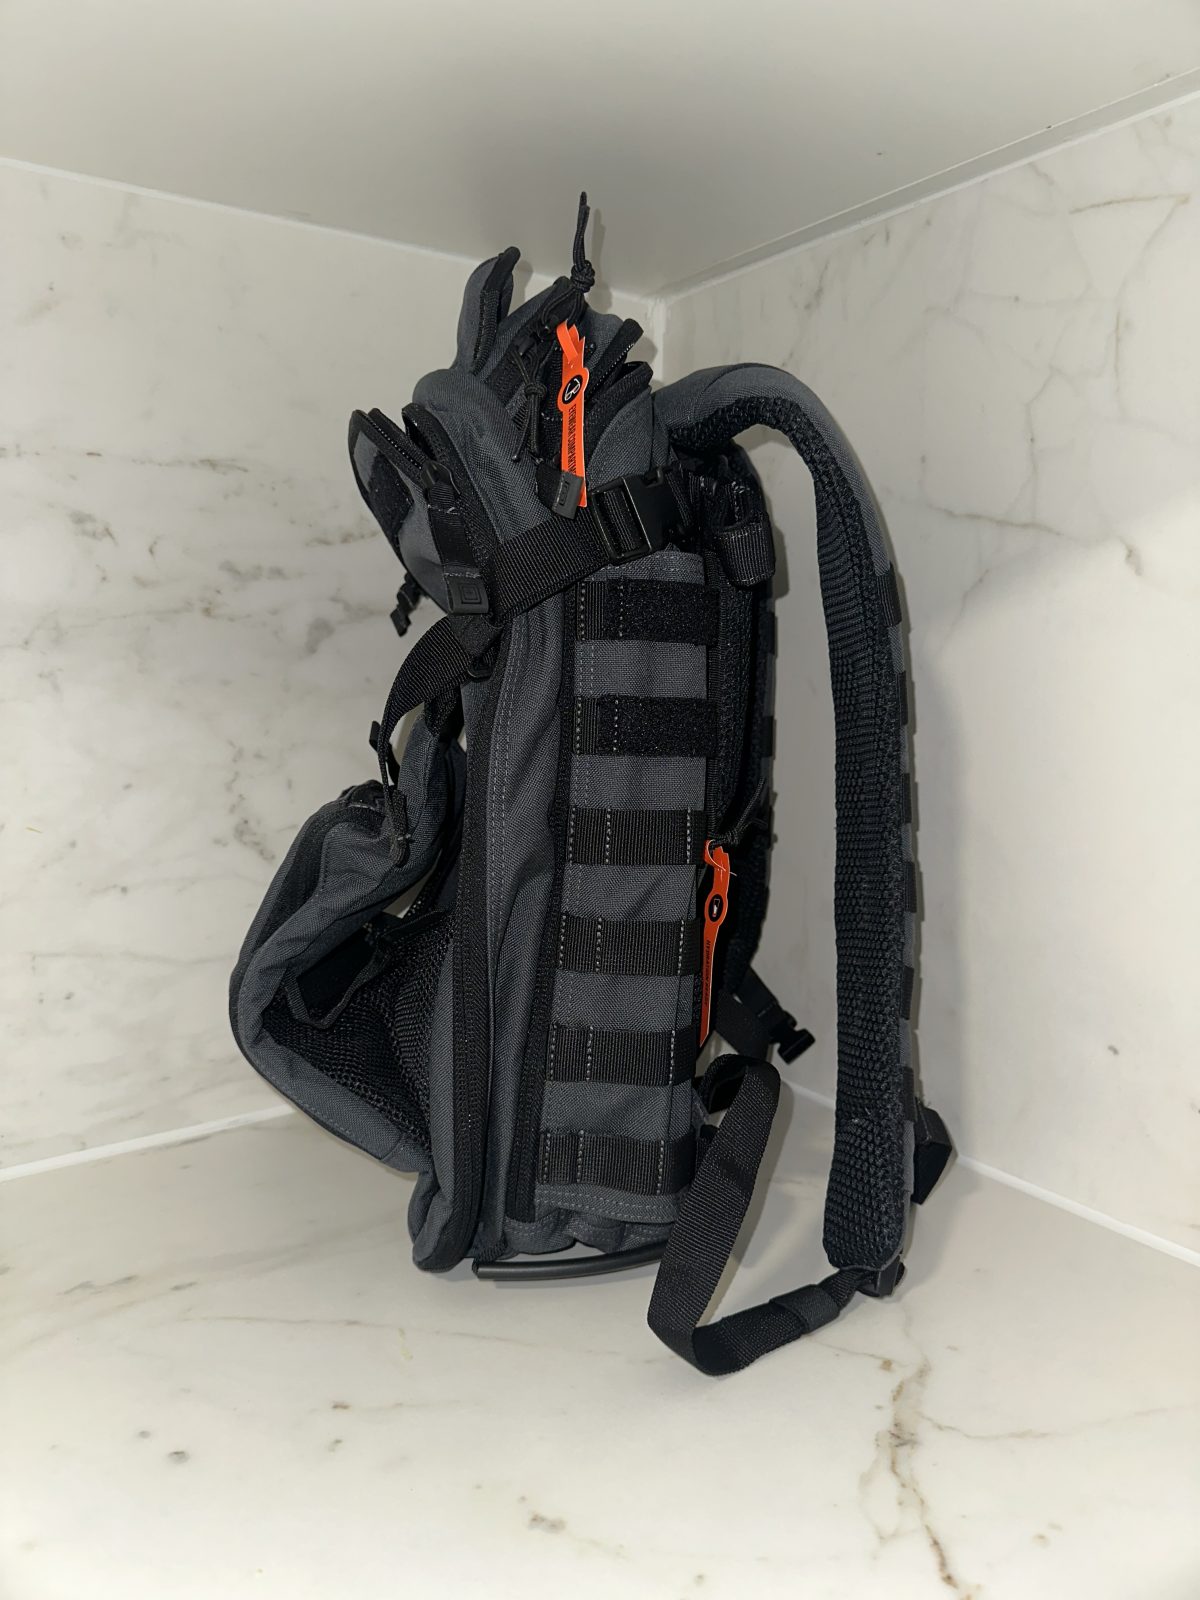 5.11 All Hazards Nitro backpack has MOLLE and SlickStick web platform